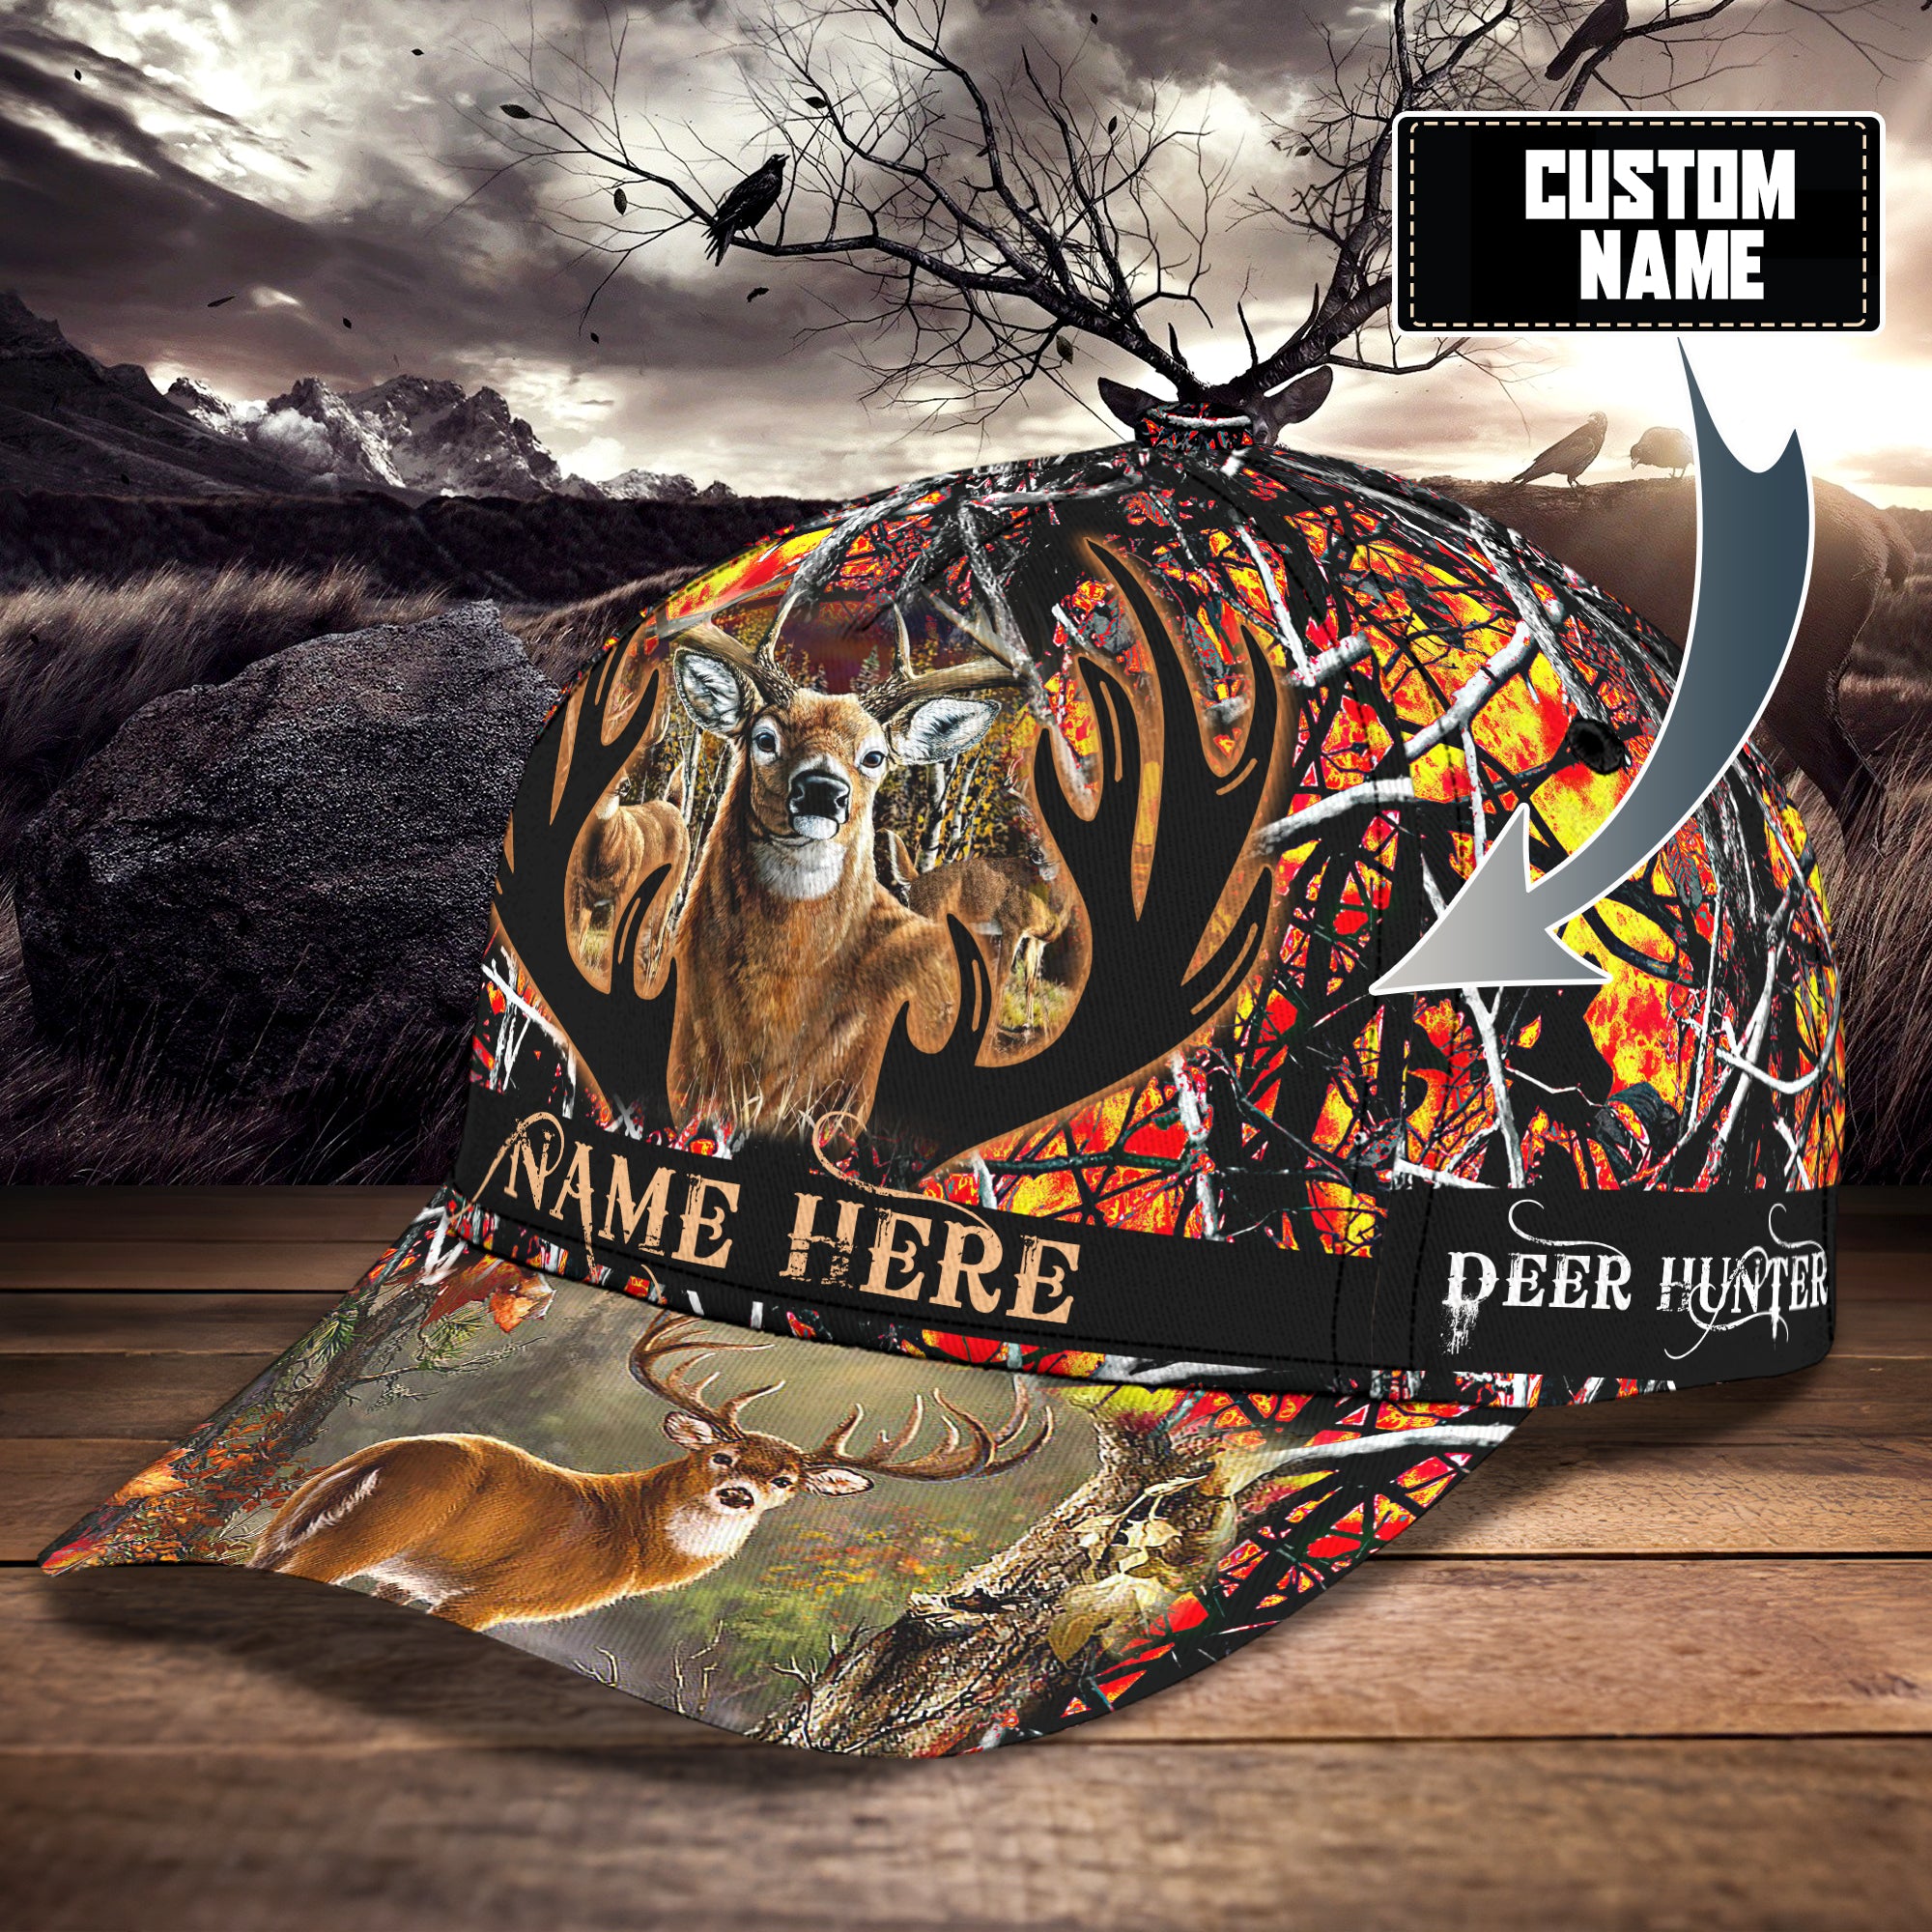 Copy of Deer Hunting - Personalized Name Cap For Deer Hunter - Hez98 01